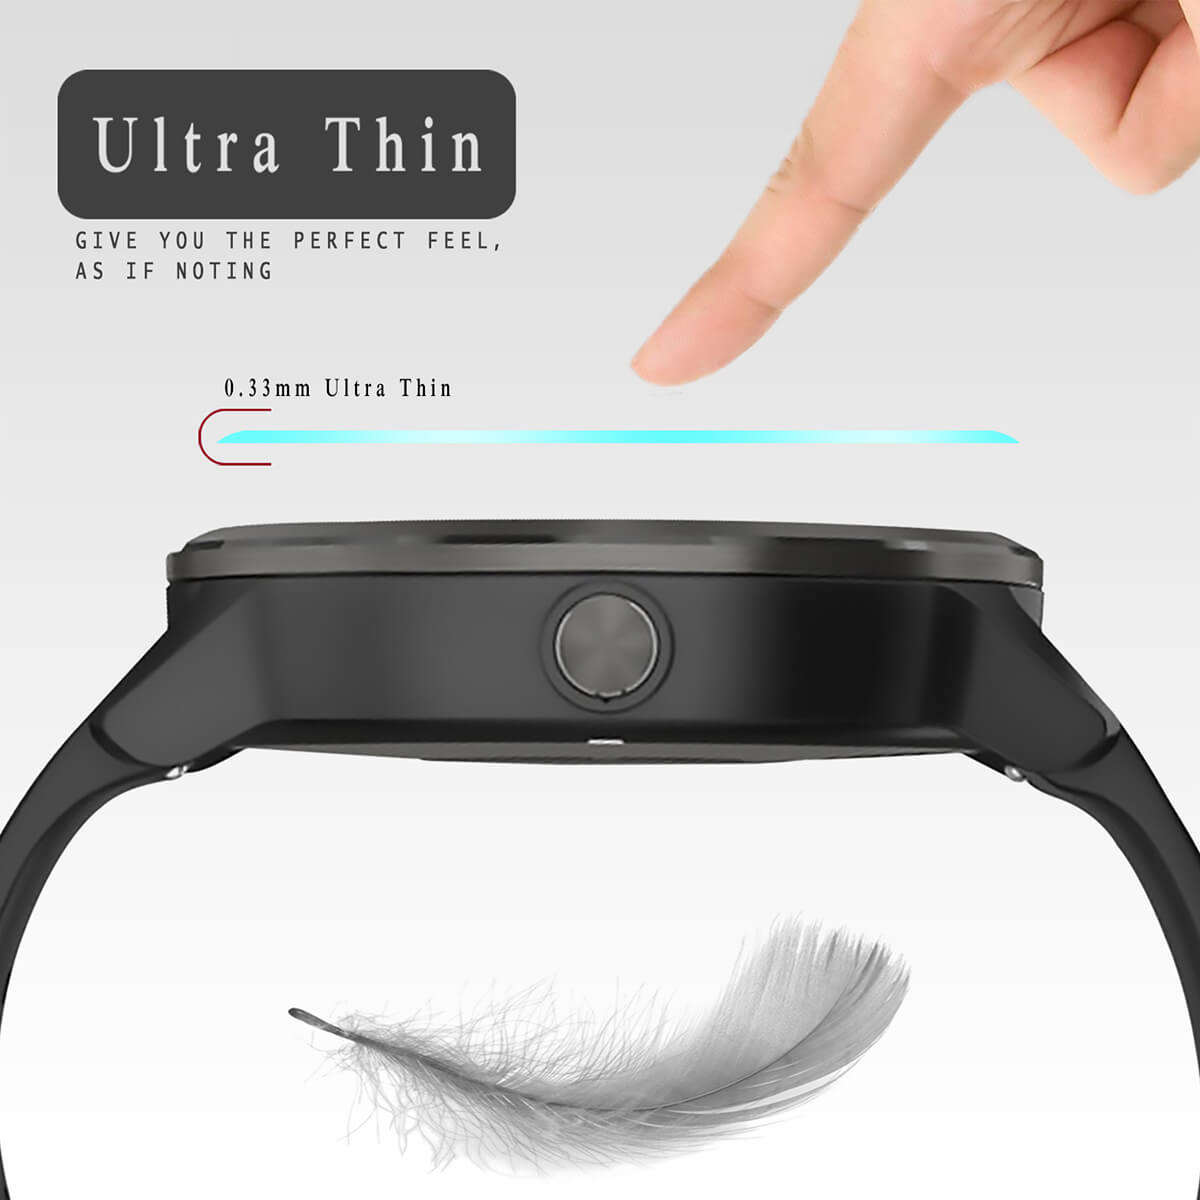 VMAX Garmin Vivoactive 3 Smart Watch Tempered Glass Screen Protector